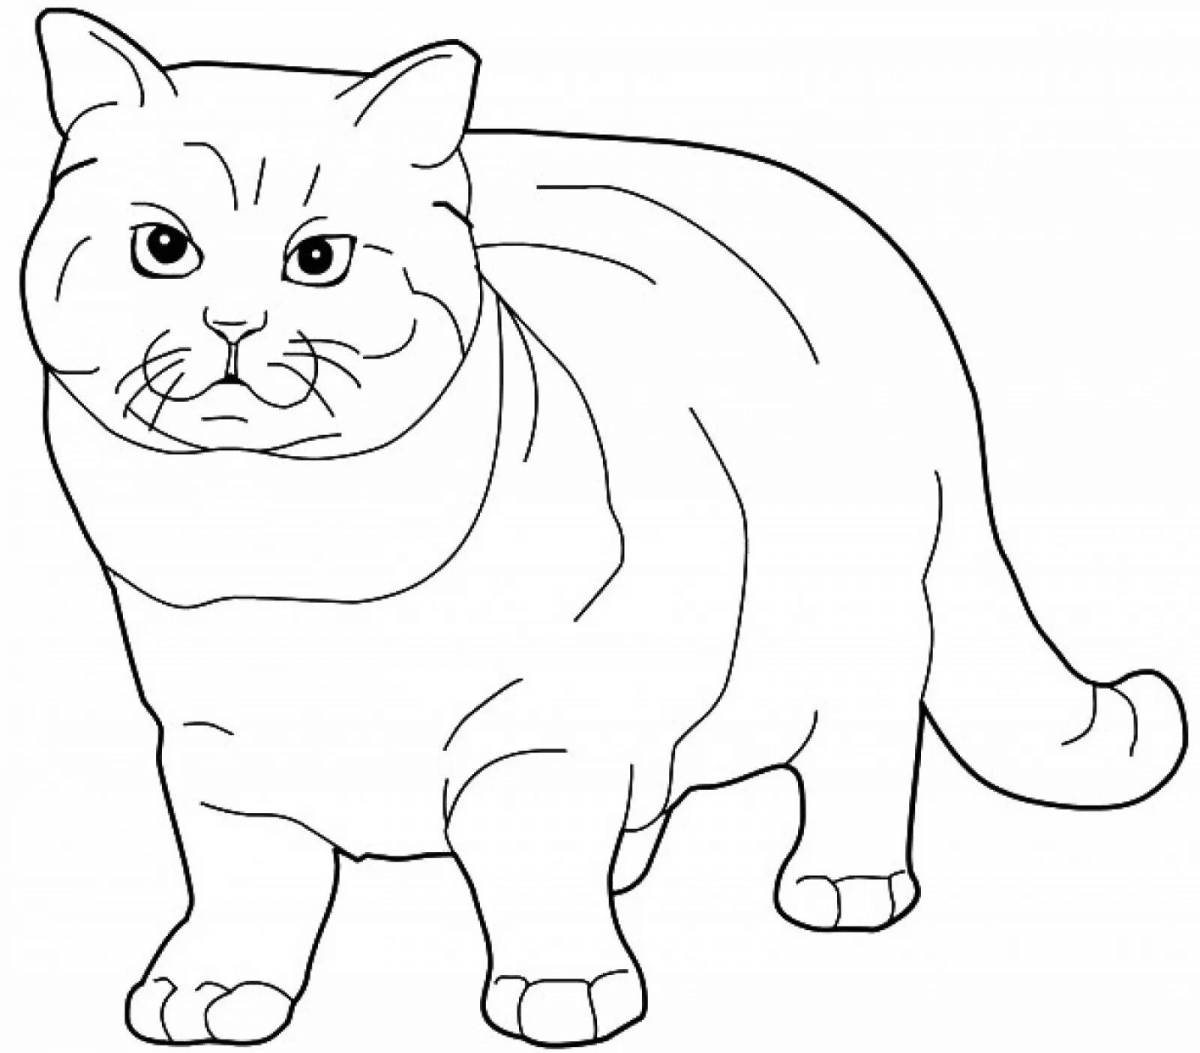 Fat cat #10